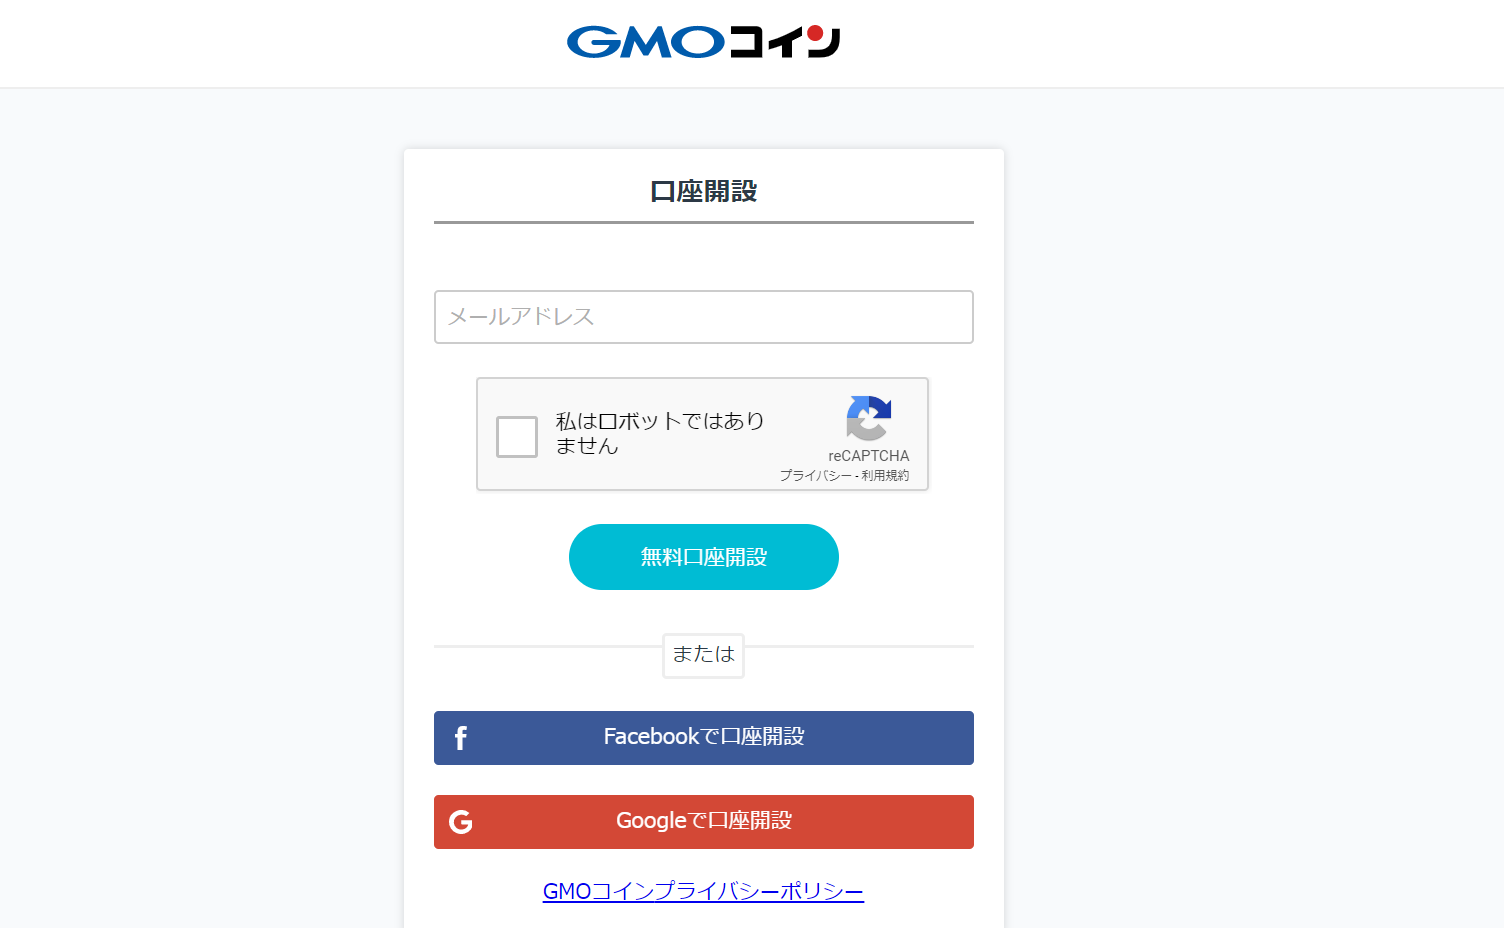 GMOCoin account